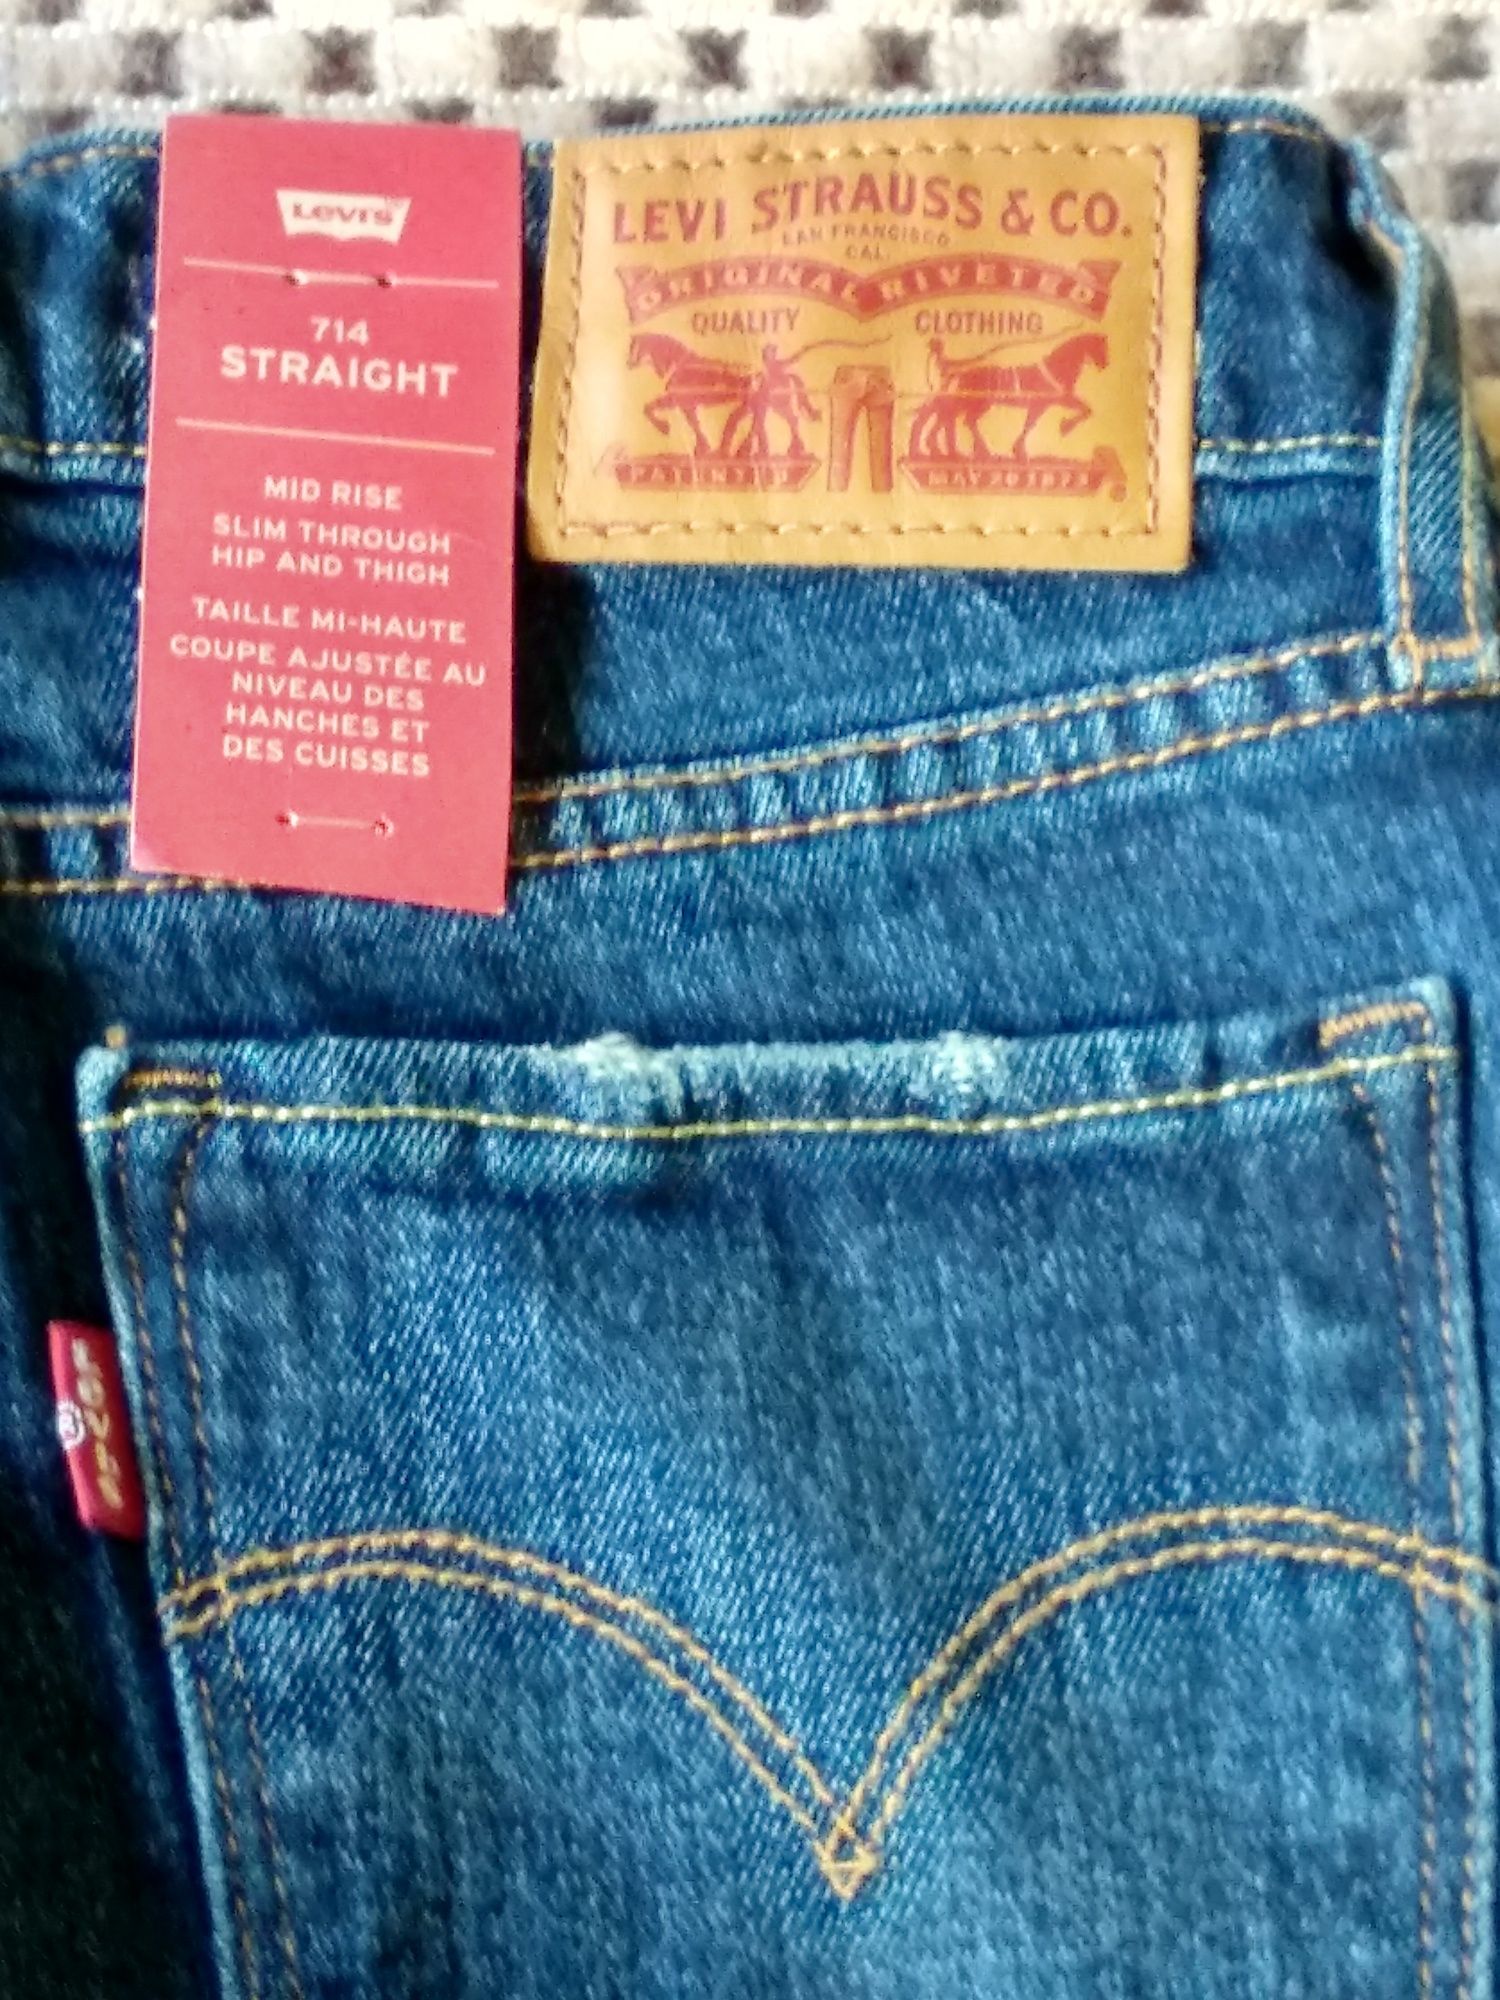 Nowe jeansy 714 straight, Levi's